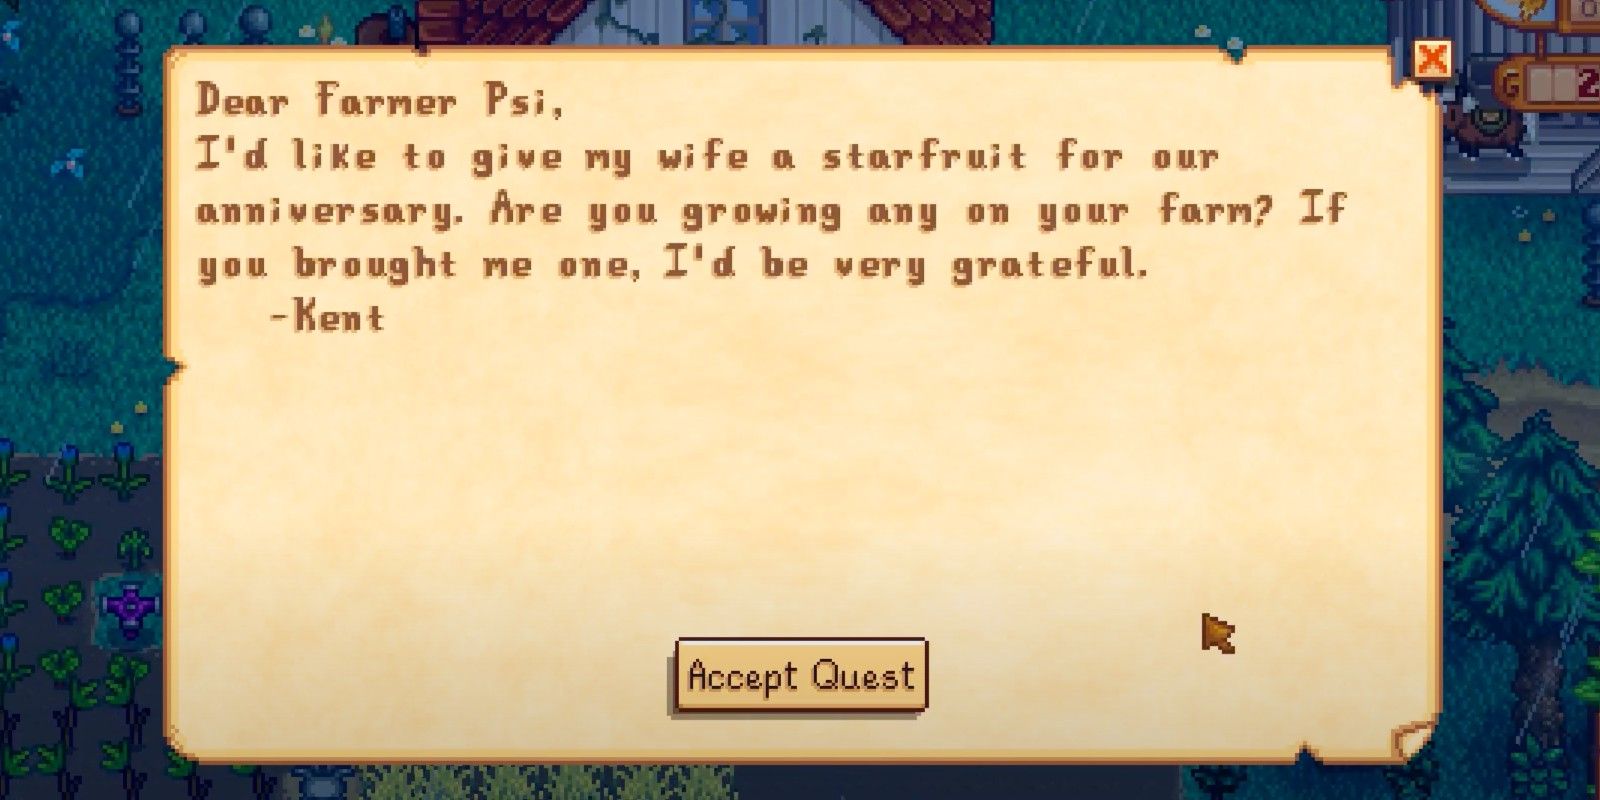 Kent's letter asking for a starfruit